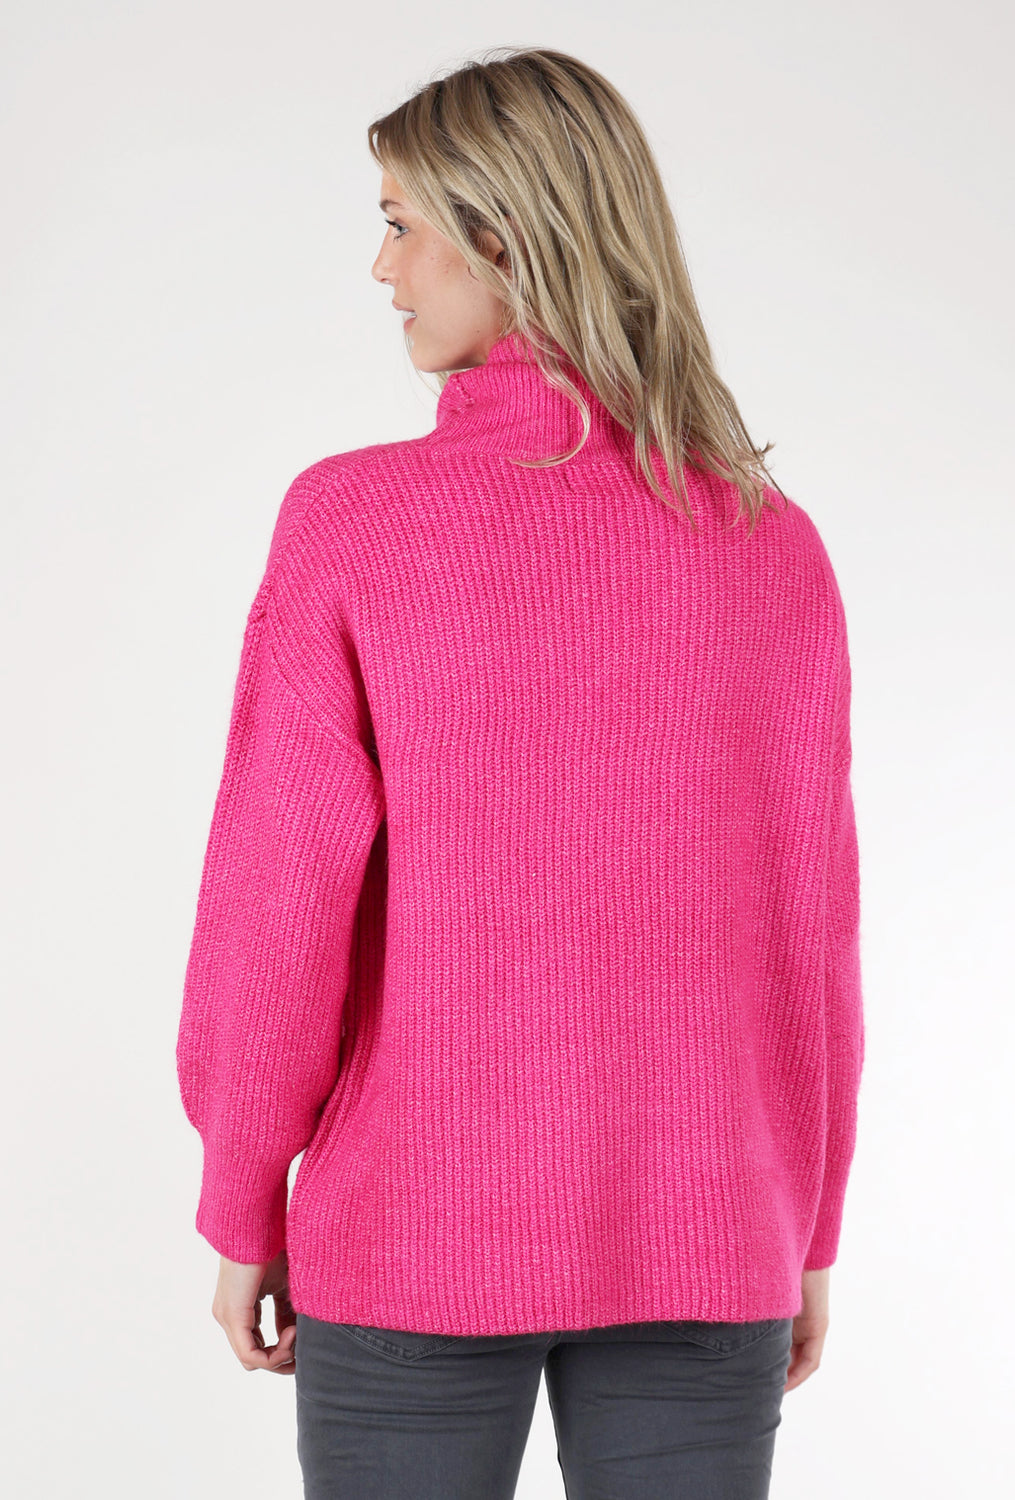 Cora Sweater, Fuchsia